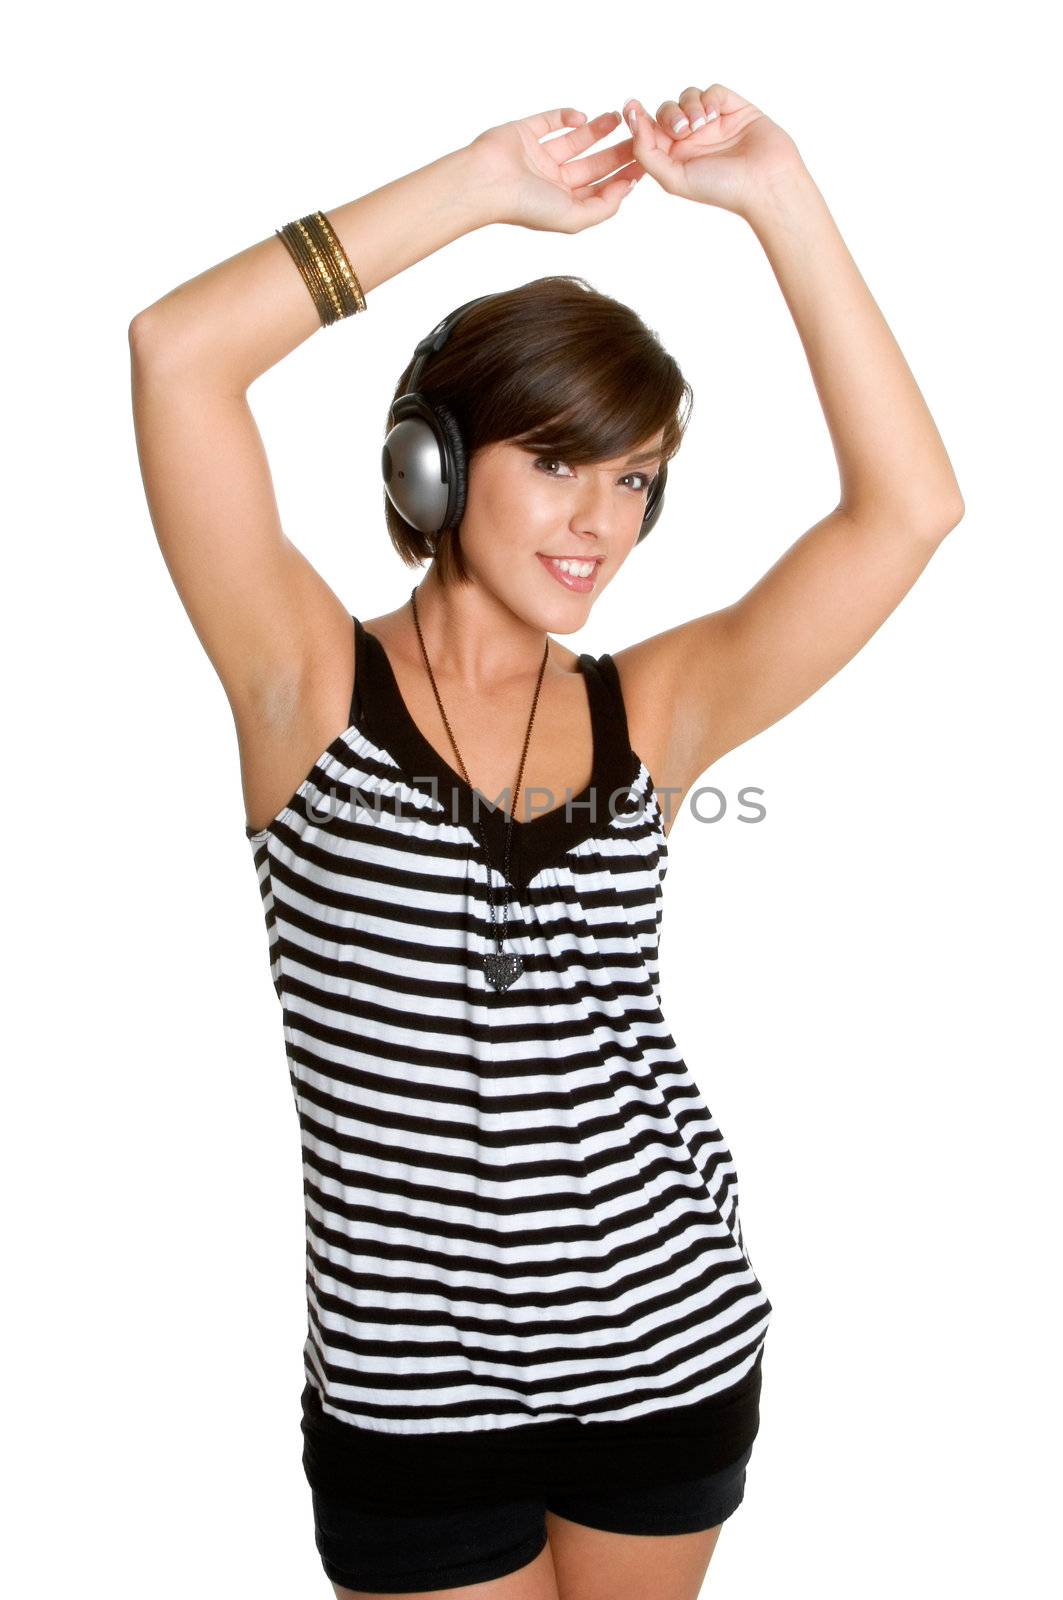 Dancing girl listening to music